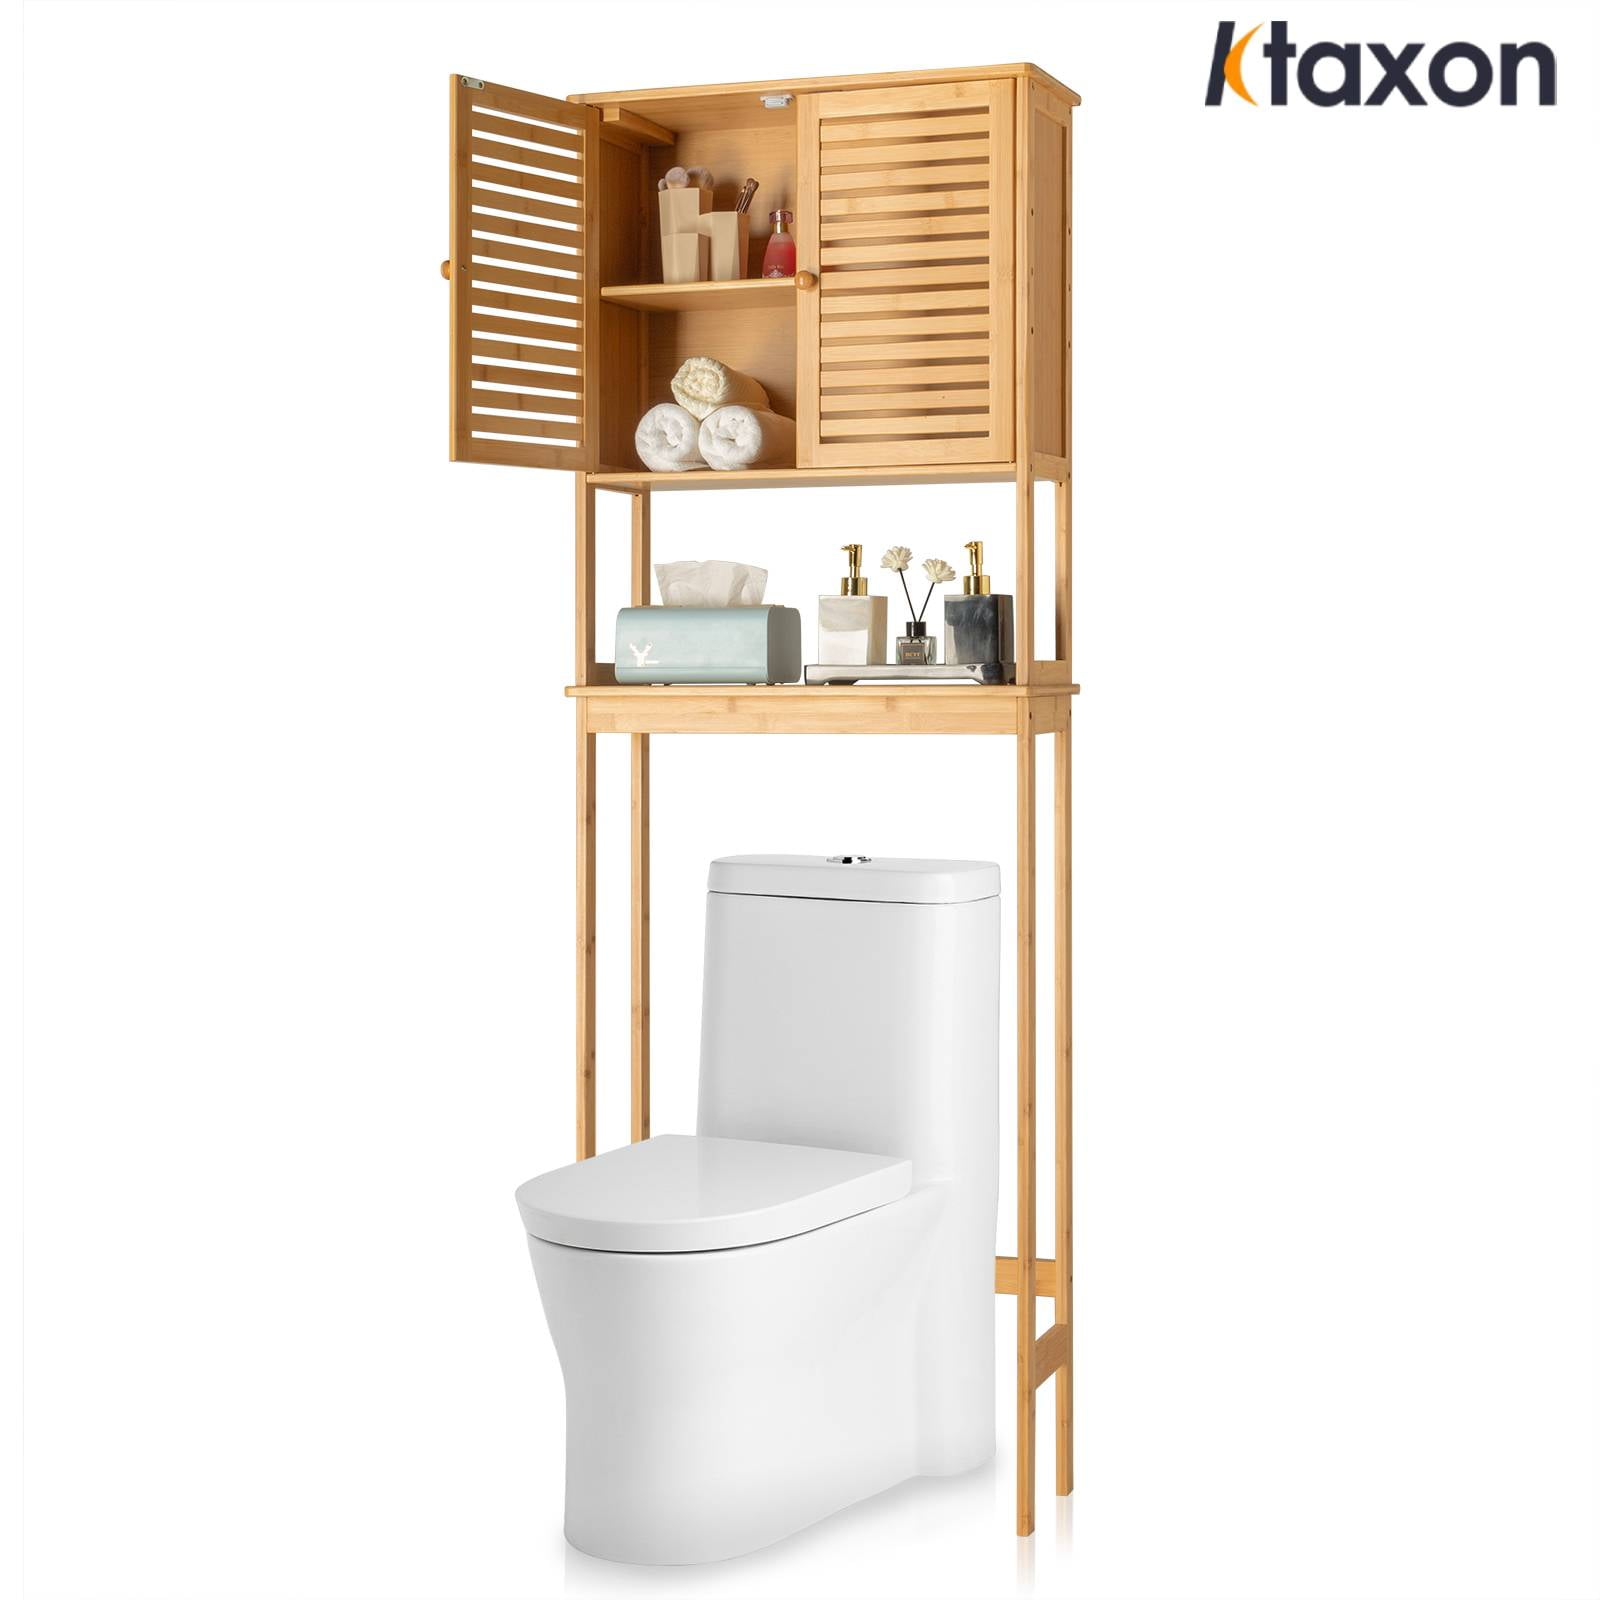 Ktaxon Over The Toilet Bathroom Storage Cabinet with Adjustable Shelf ...